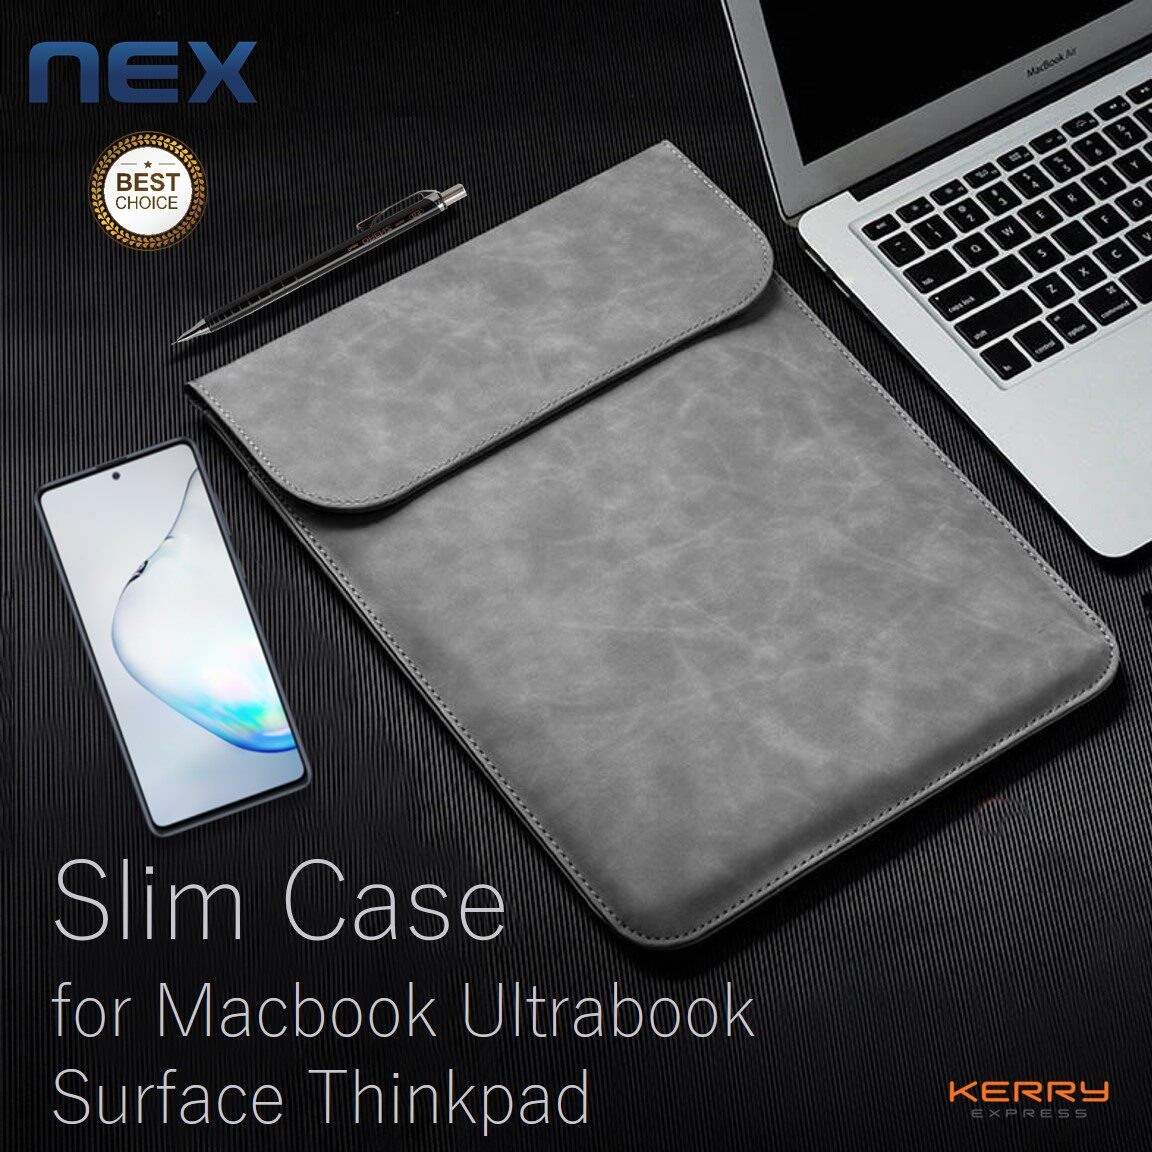 NEX Slim Case เคสโน๊ตบุ๊ค เคสMacbook  12.5, 13.3, 15.6 นิ้ว กระเป๋าโน๊ตบุ๊ค เคสหนังใส่MacBook Slim Laptop PU Leather Case Cover for MacBook Air/Pro Laptop Surface 12.5-15.6 inch